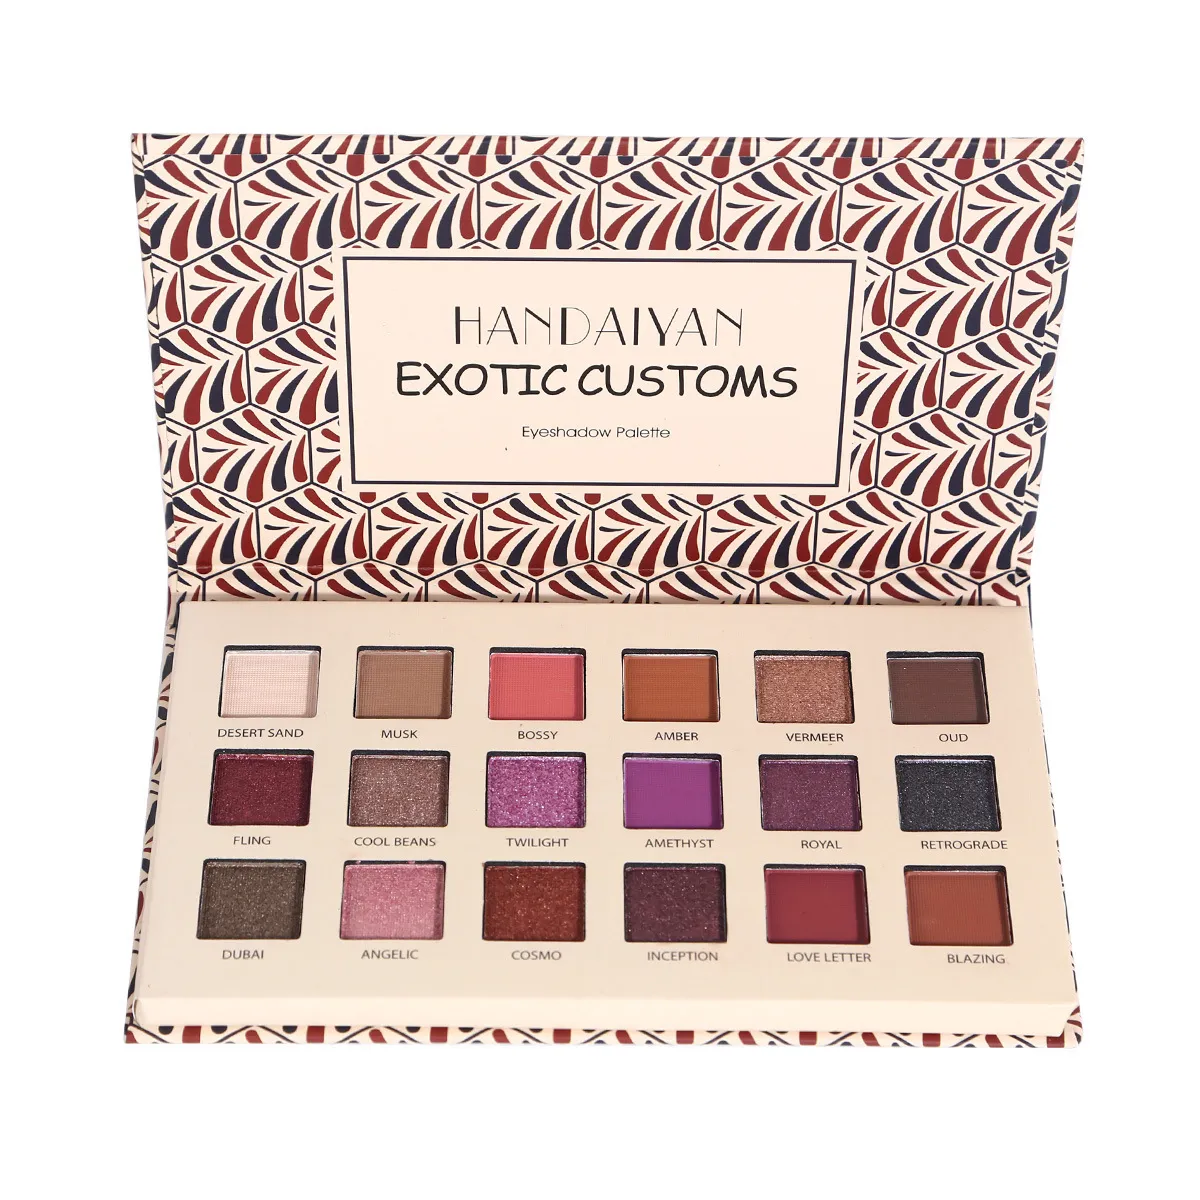 Top Quality HANDAIYAN Exotic Customs Matte Eyeshadow Palettes 18 Color Shimmer Eye Shadow